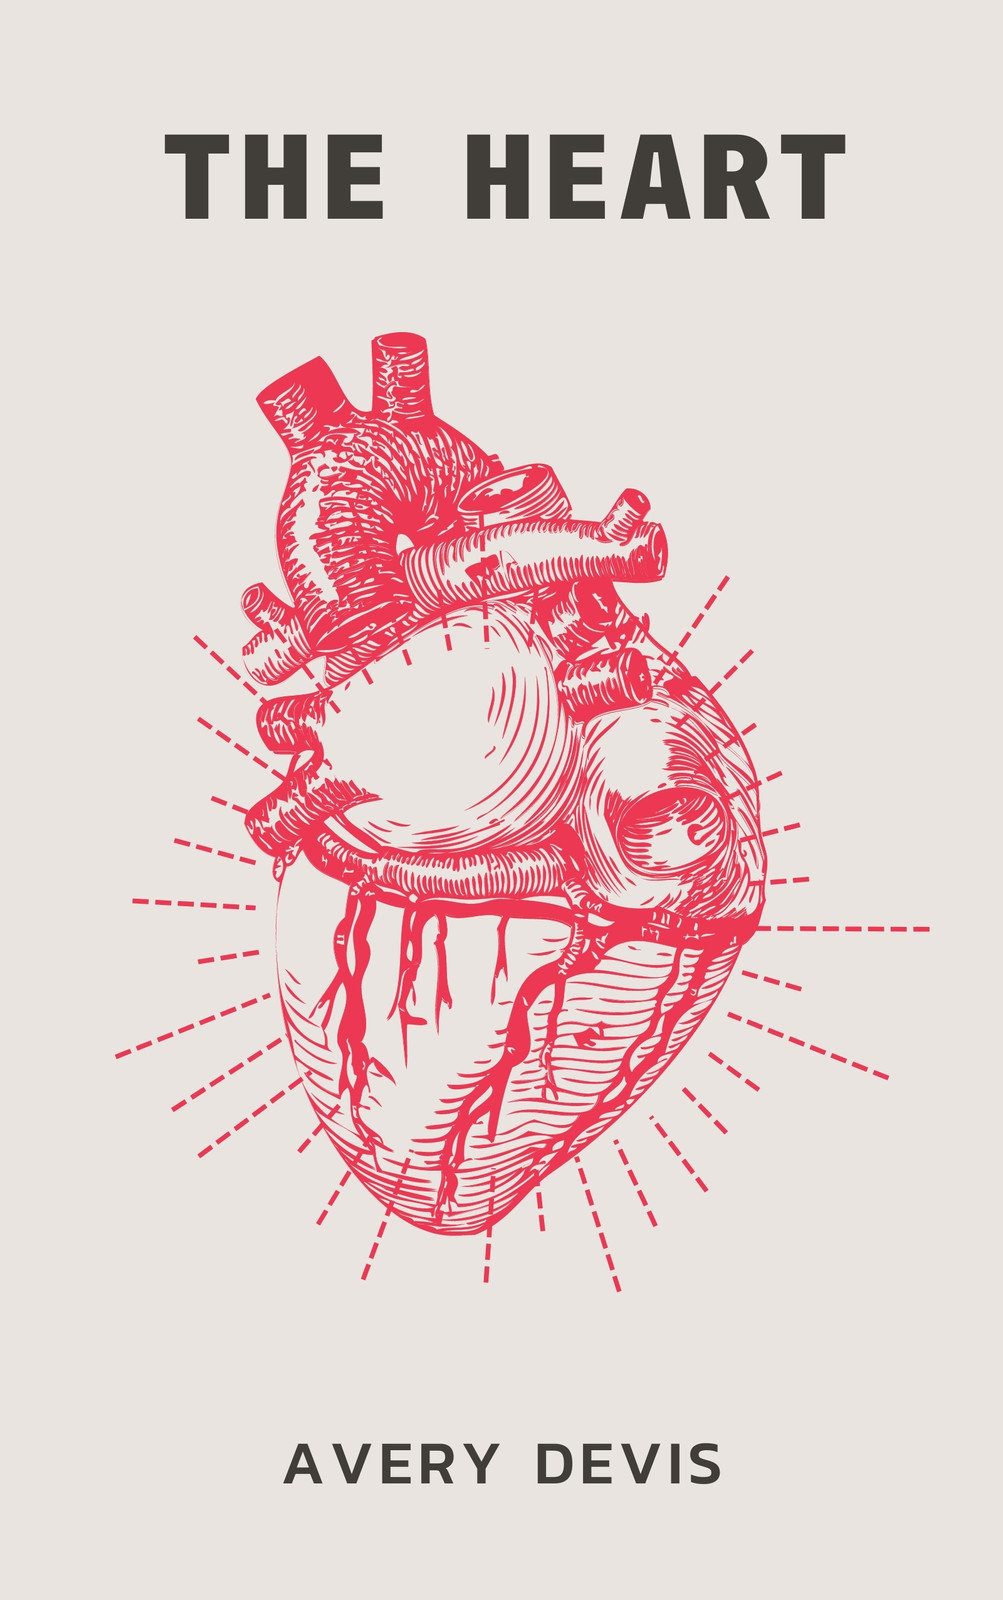 https://marketplace.canva.com/EAFRpAwNIoc/1/0/1003w/canva-red-black-simple-heart-illustration-book-cover-xaS7YB7vELg.jpg